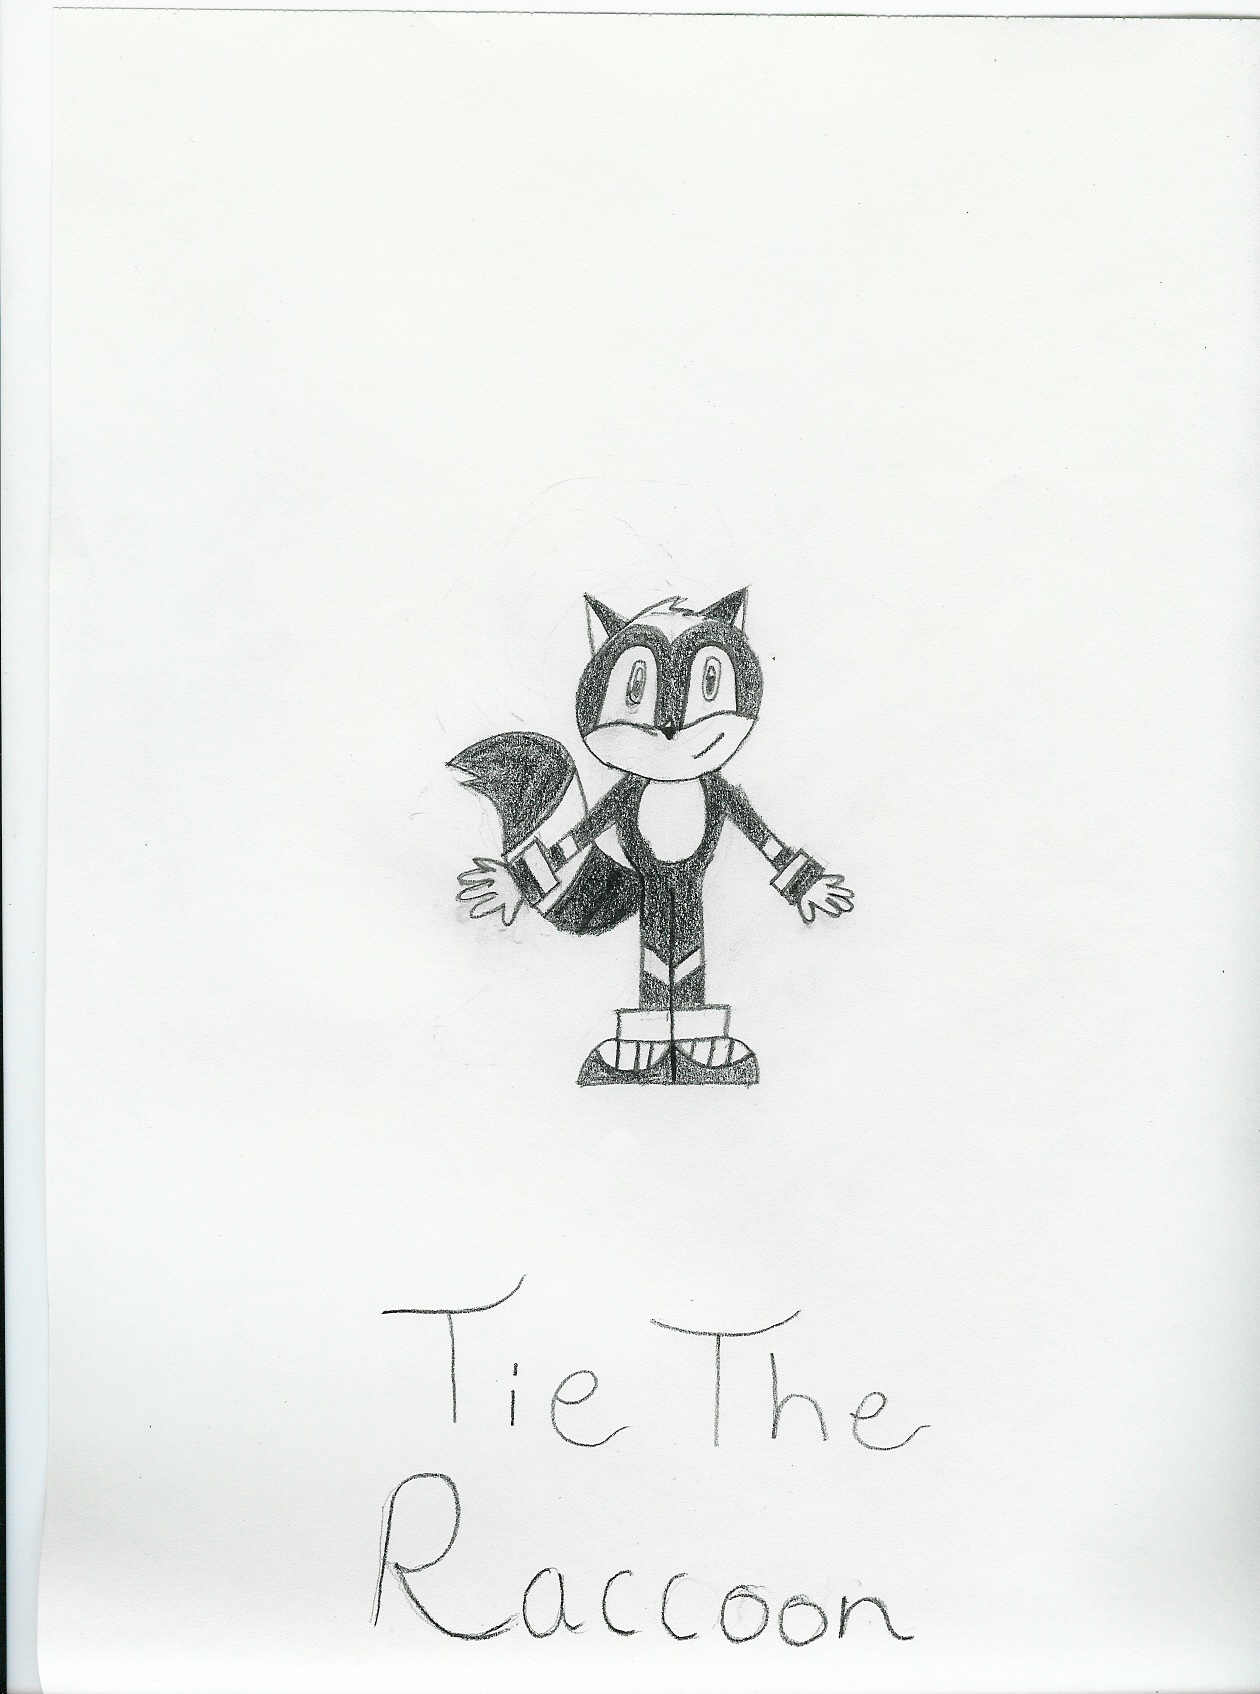 Tye the Raccoon by darkness42